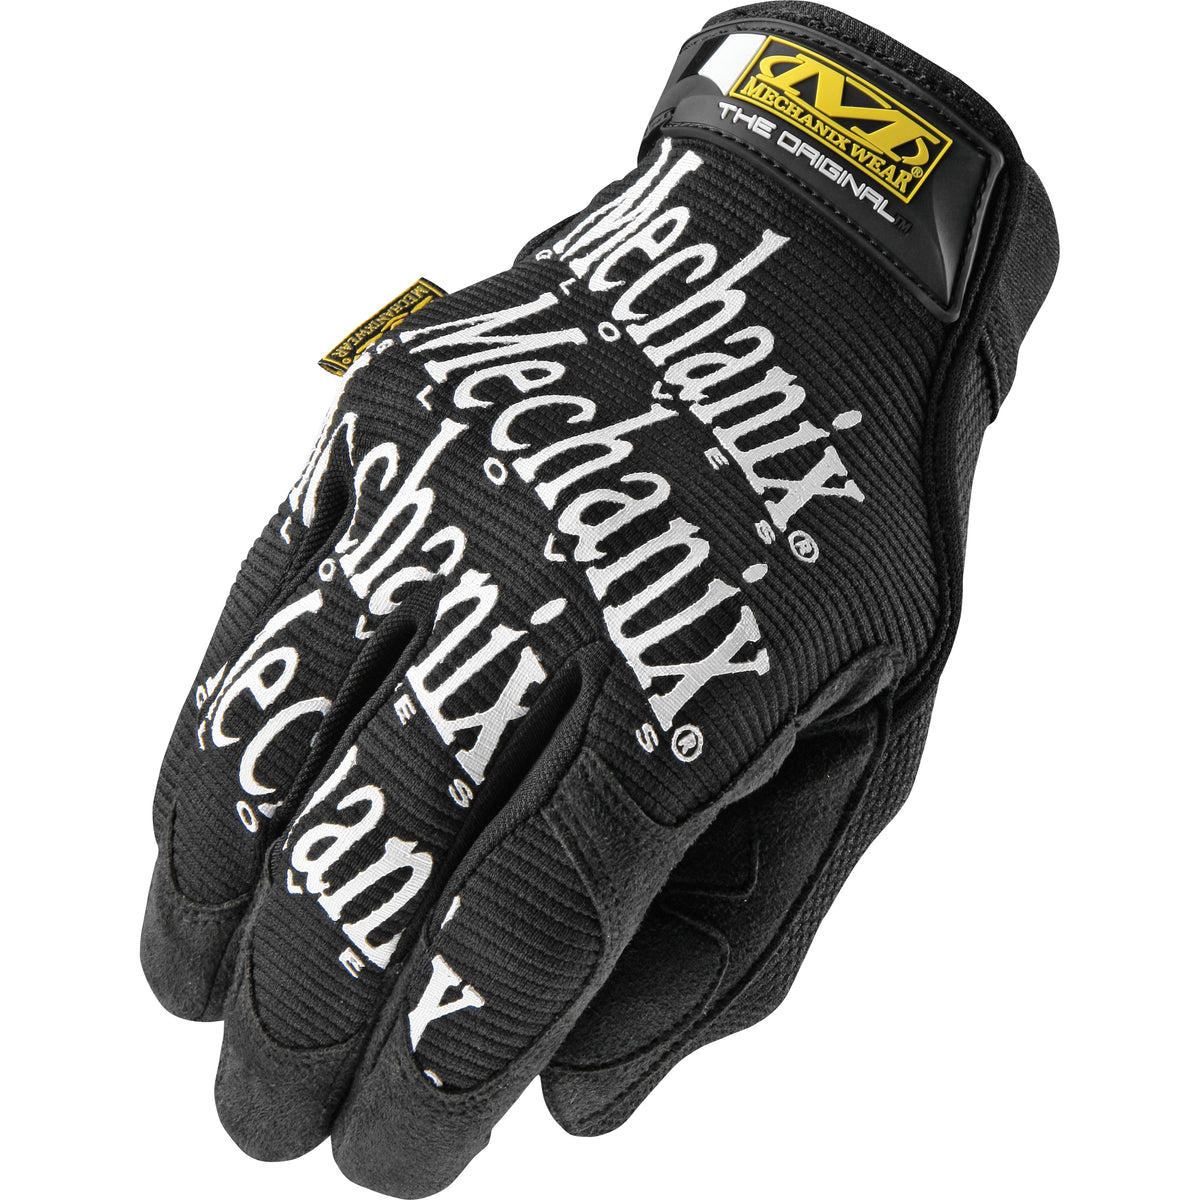 Mechanix Wear MG-05-009 The Original Glove - Medium, Black